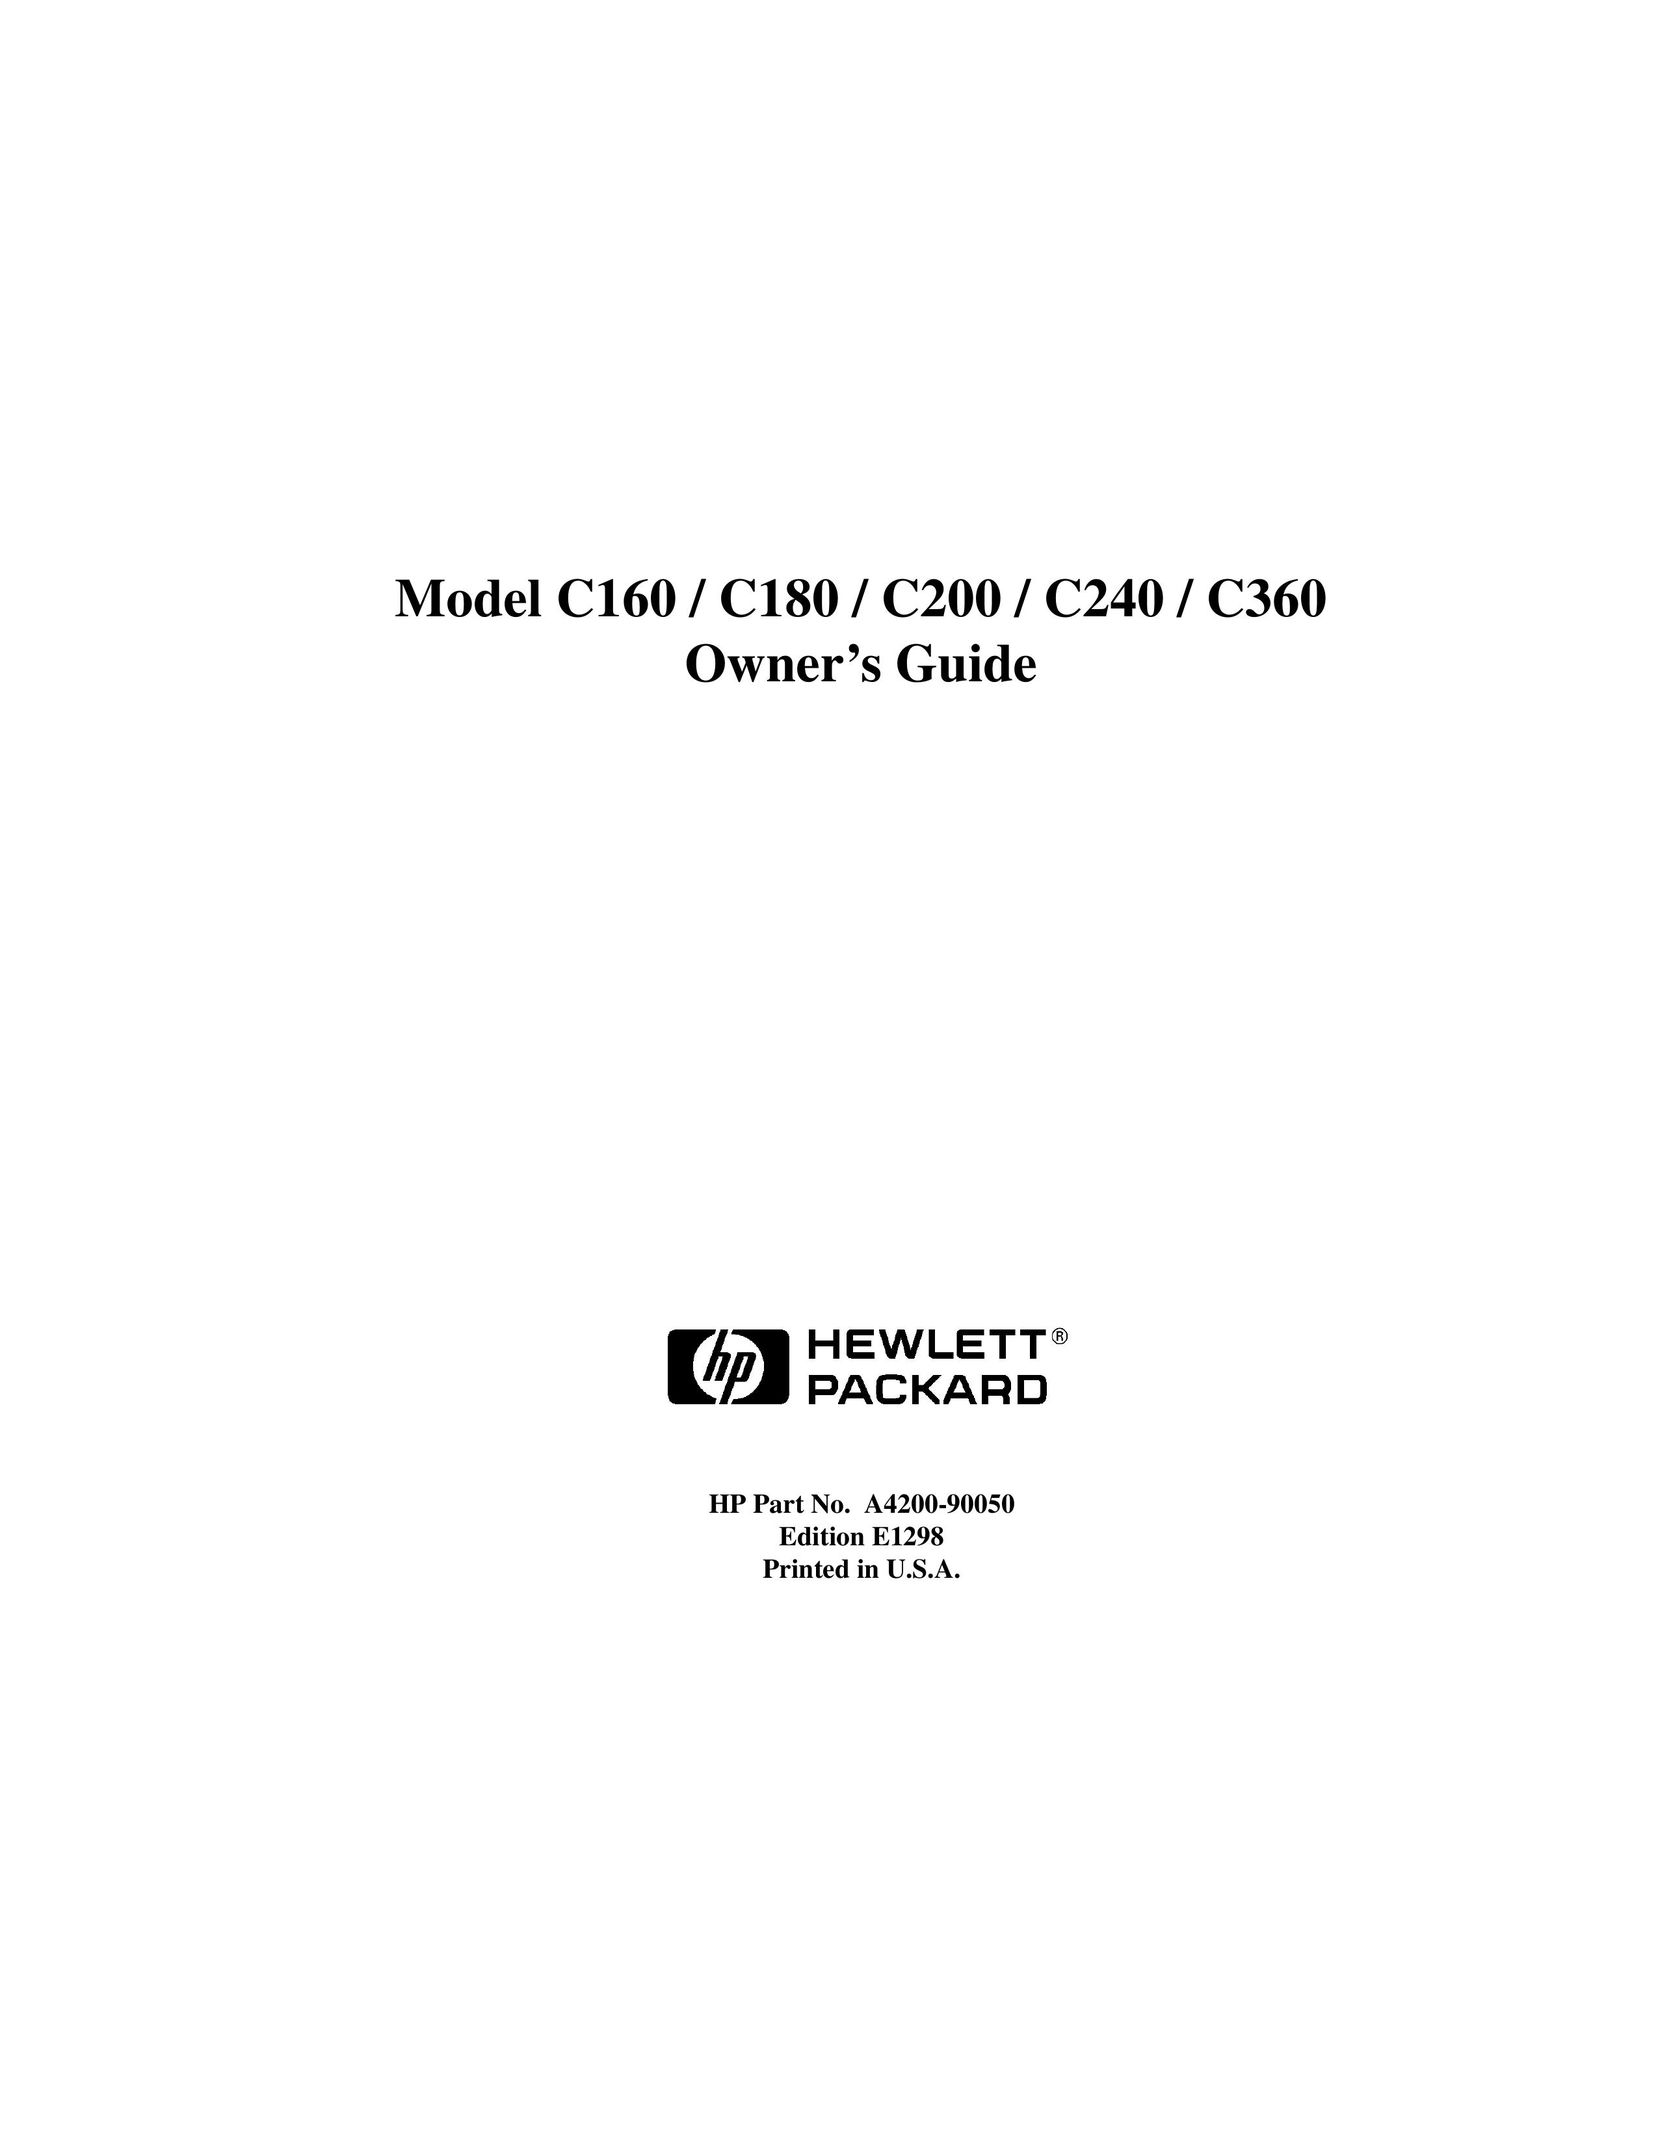 Compaq C180 Computer Monitor User Manual